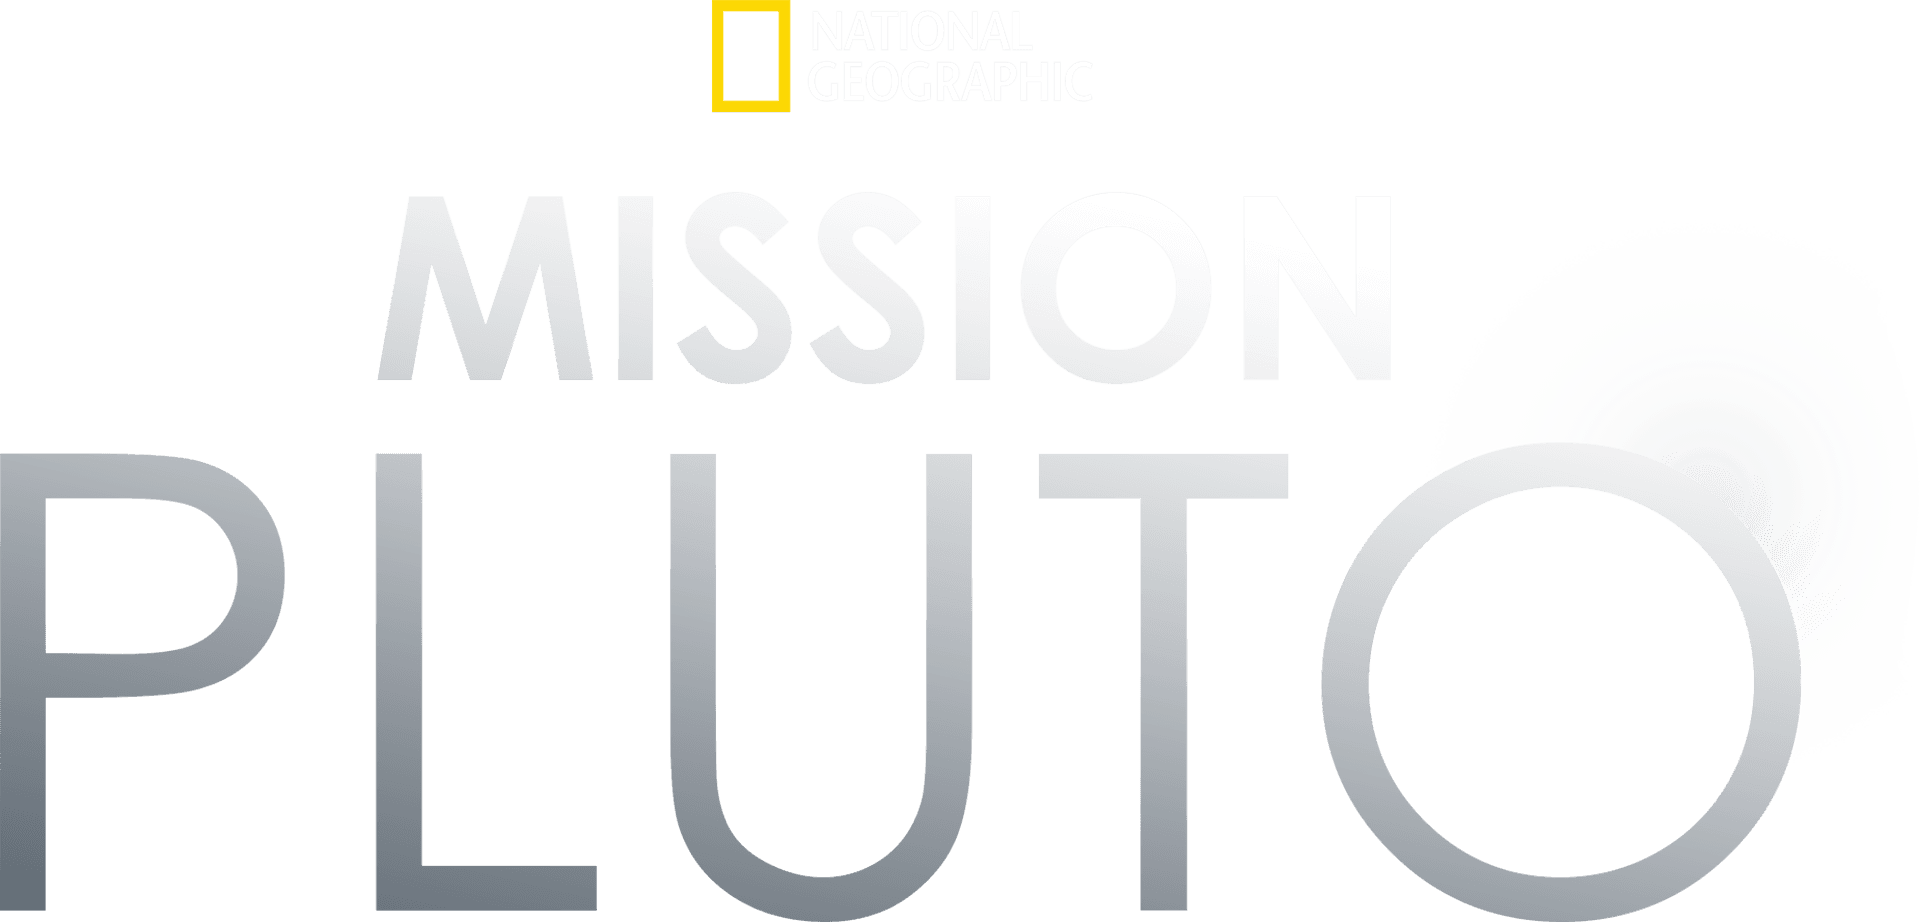 Mission Pluto logo